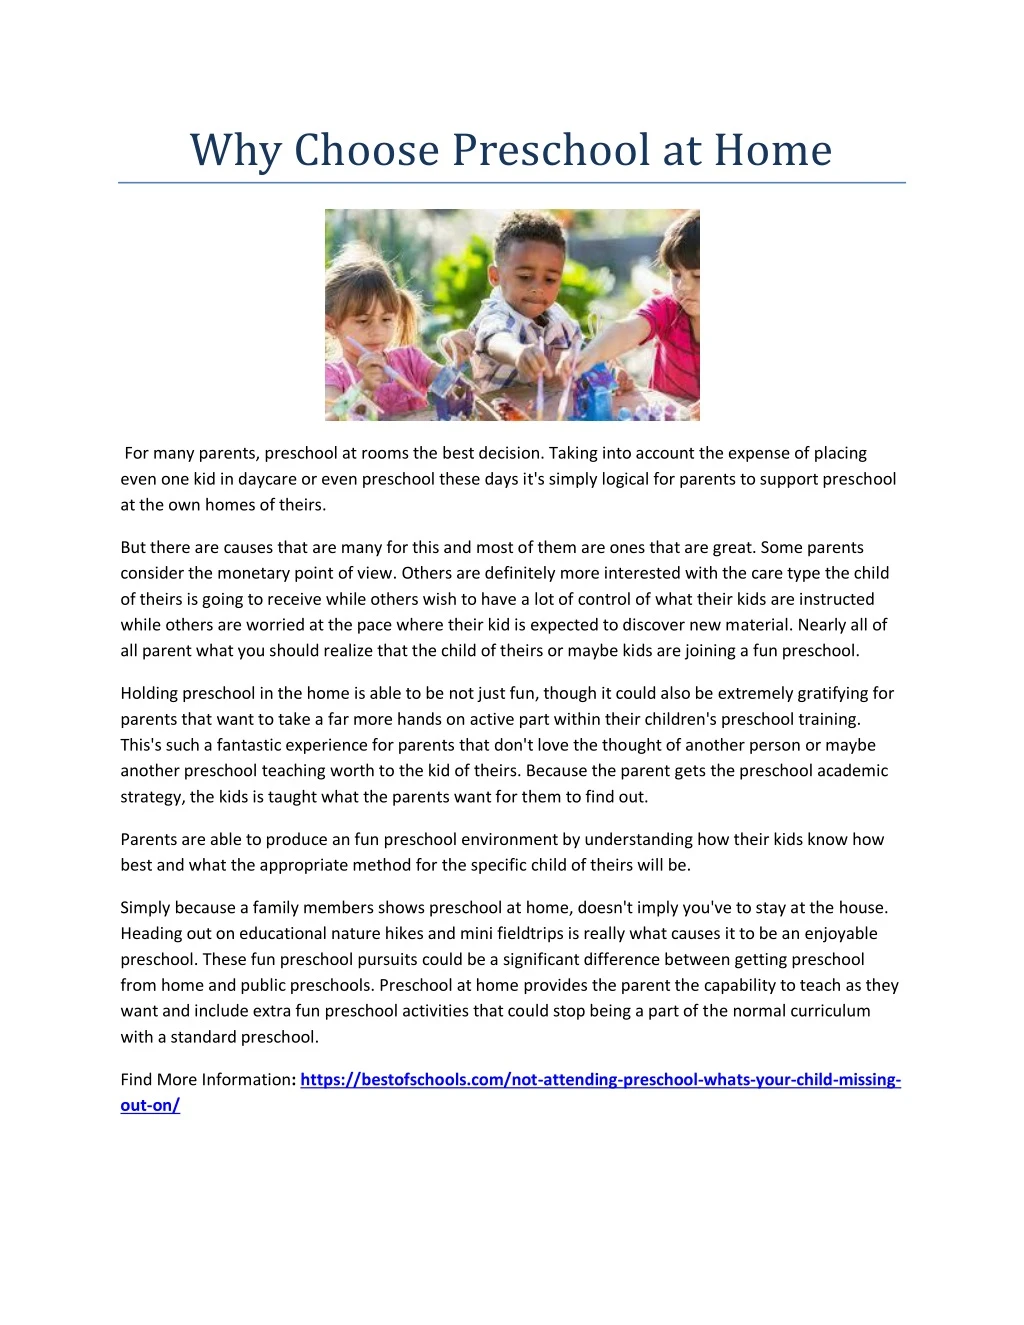 why choose preschool at home